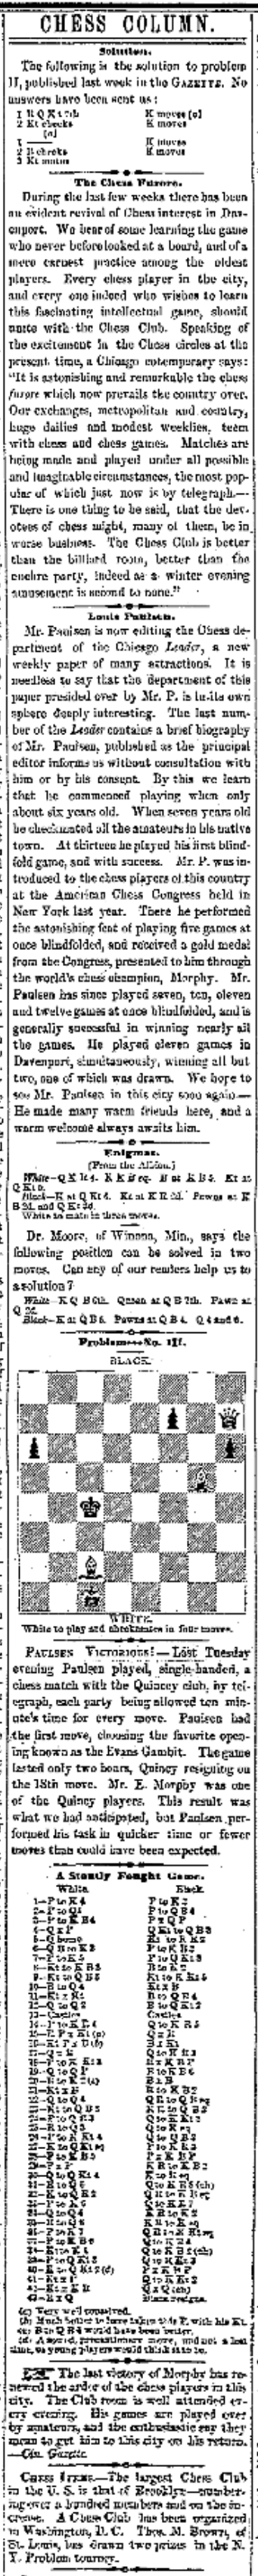 1859.01.28-01 Davenport Daily Gazette.png